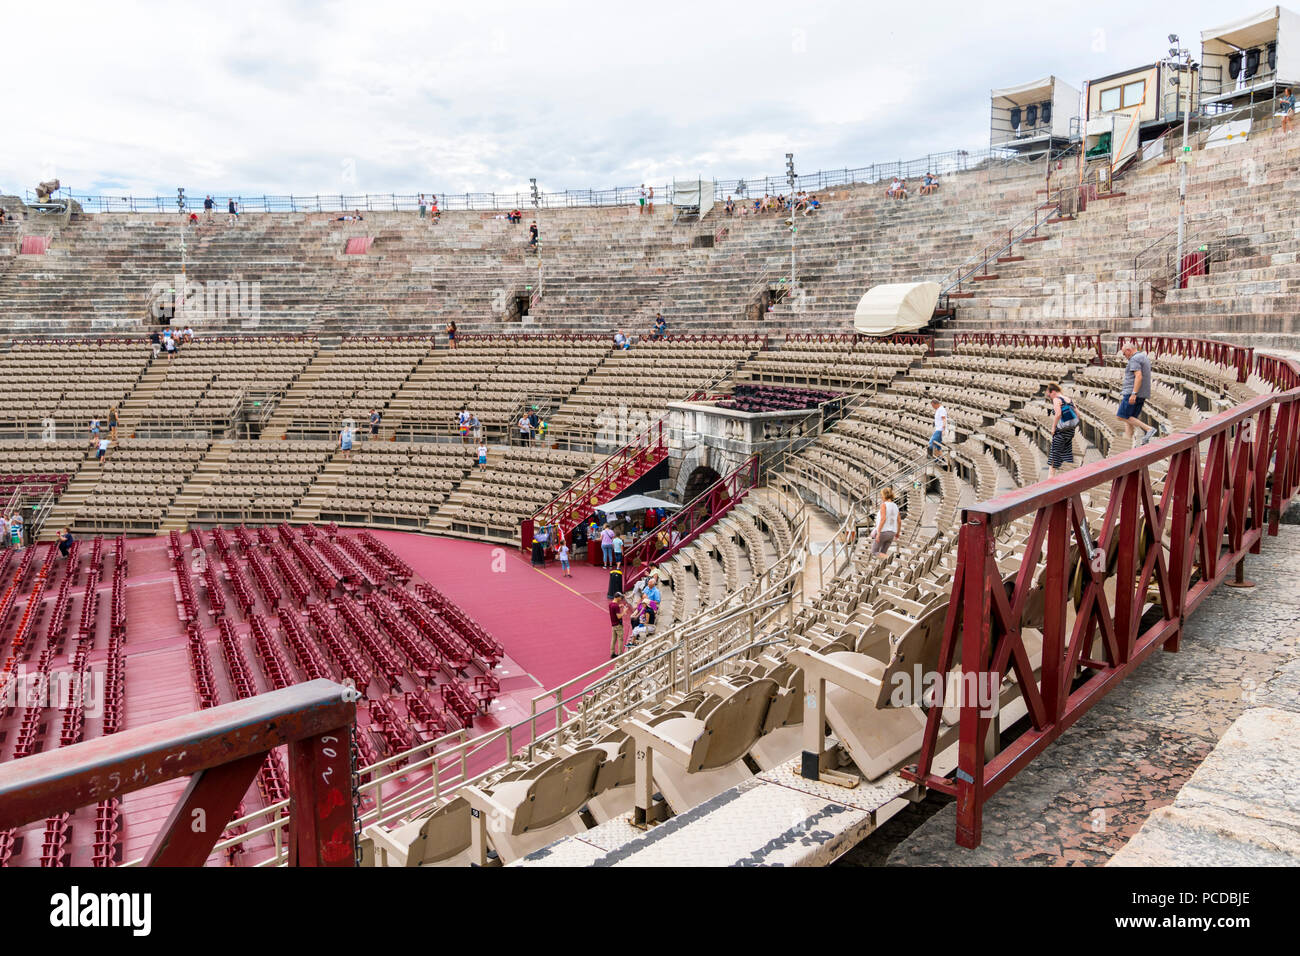 Giuseppe Verdi Aida Opera Stage Setup eingestellt, Arena Verona Italien Verona  Verona amphitheater Amphitheater, Theater, Show Nacht Unterhaltung  Stockfotografie - Alamy